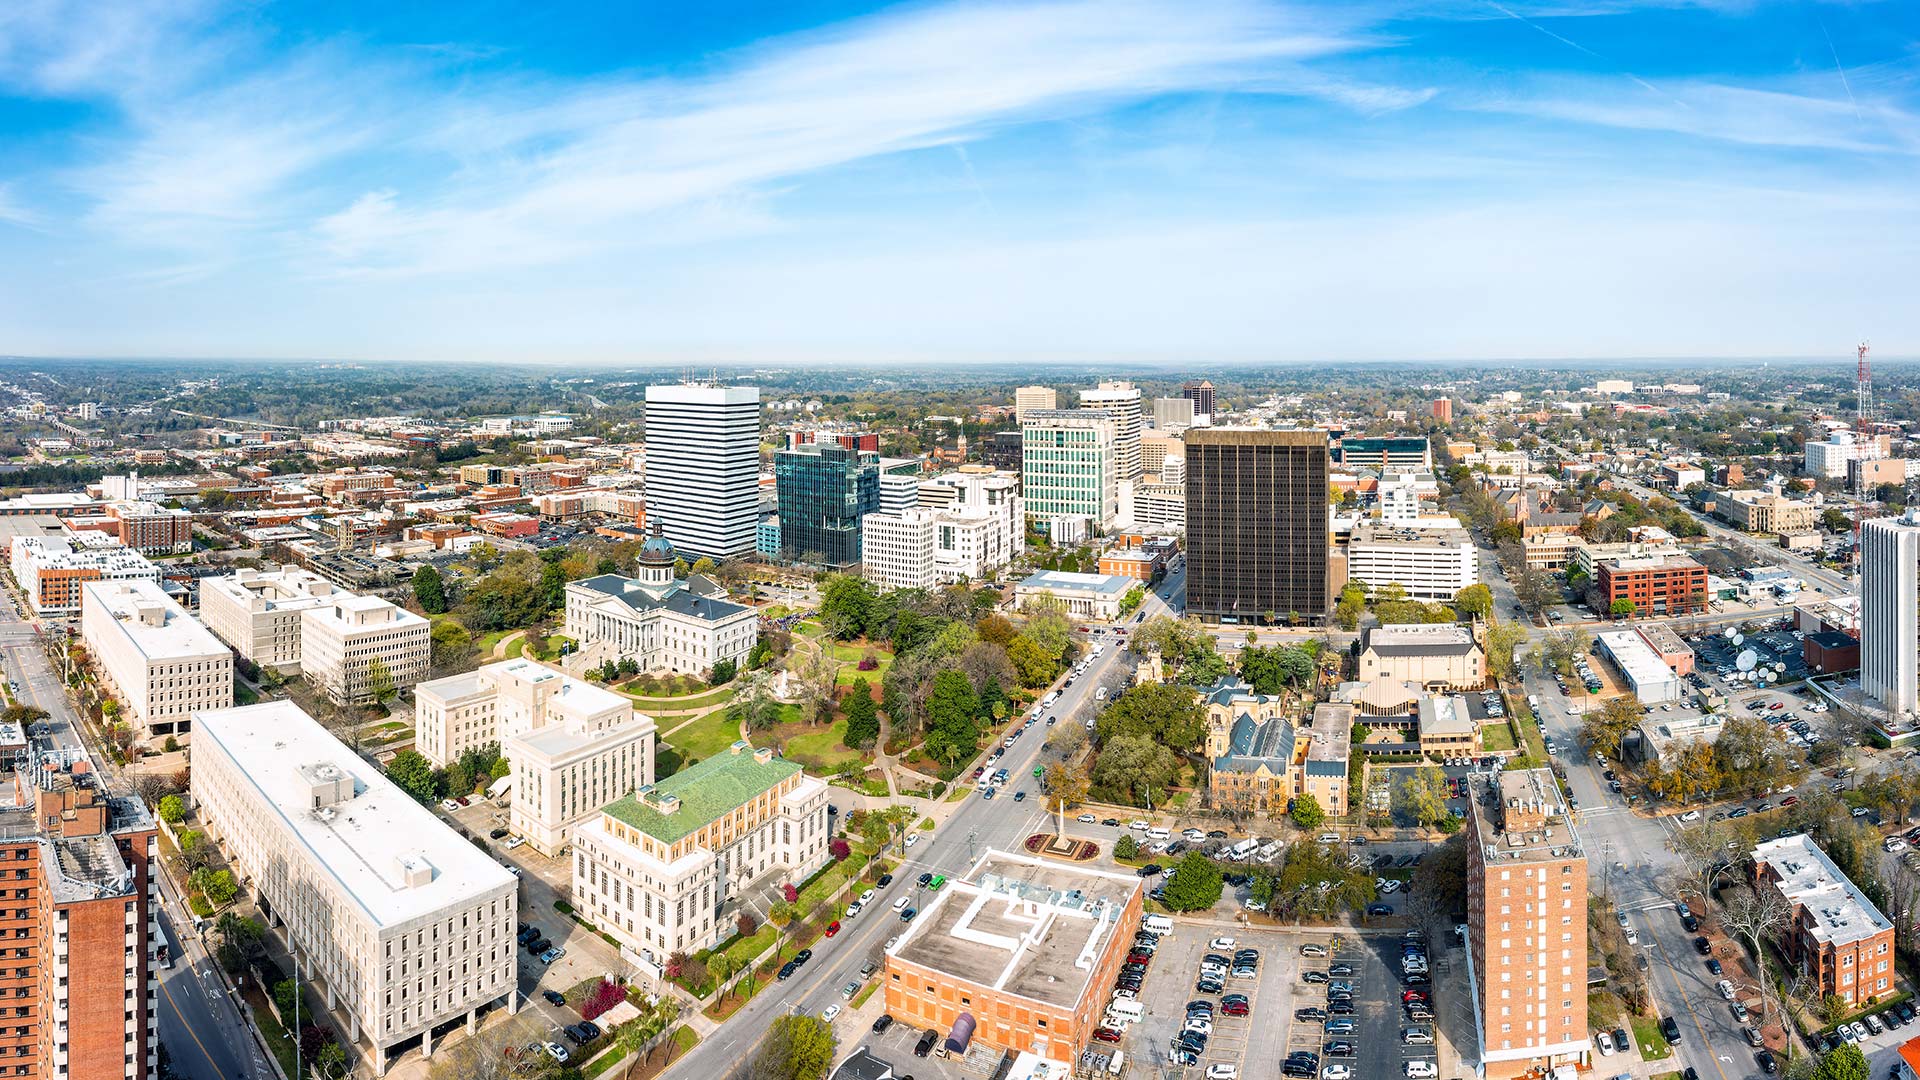 Aerial view of Columbia, South Carolina